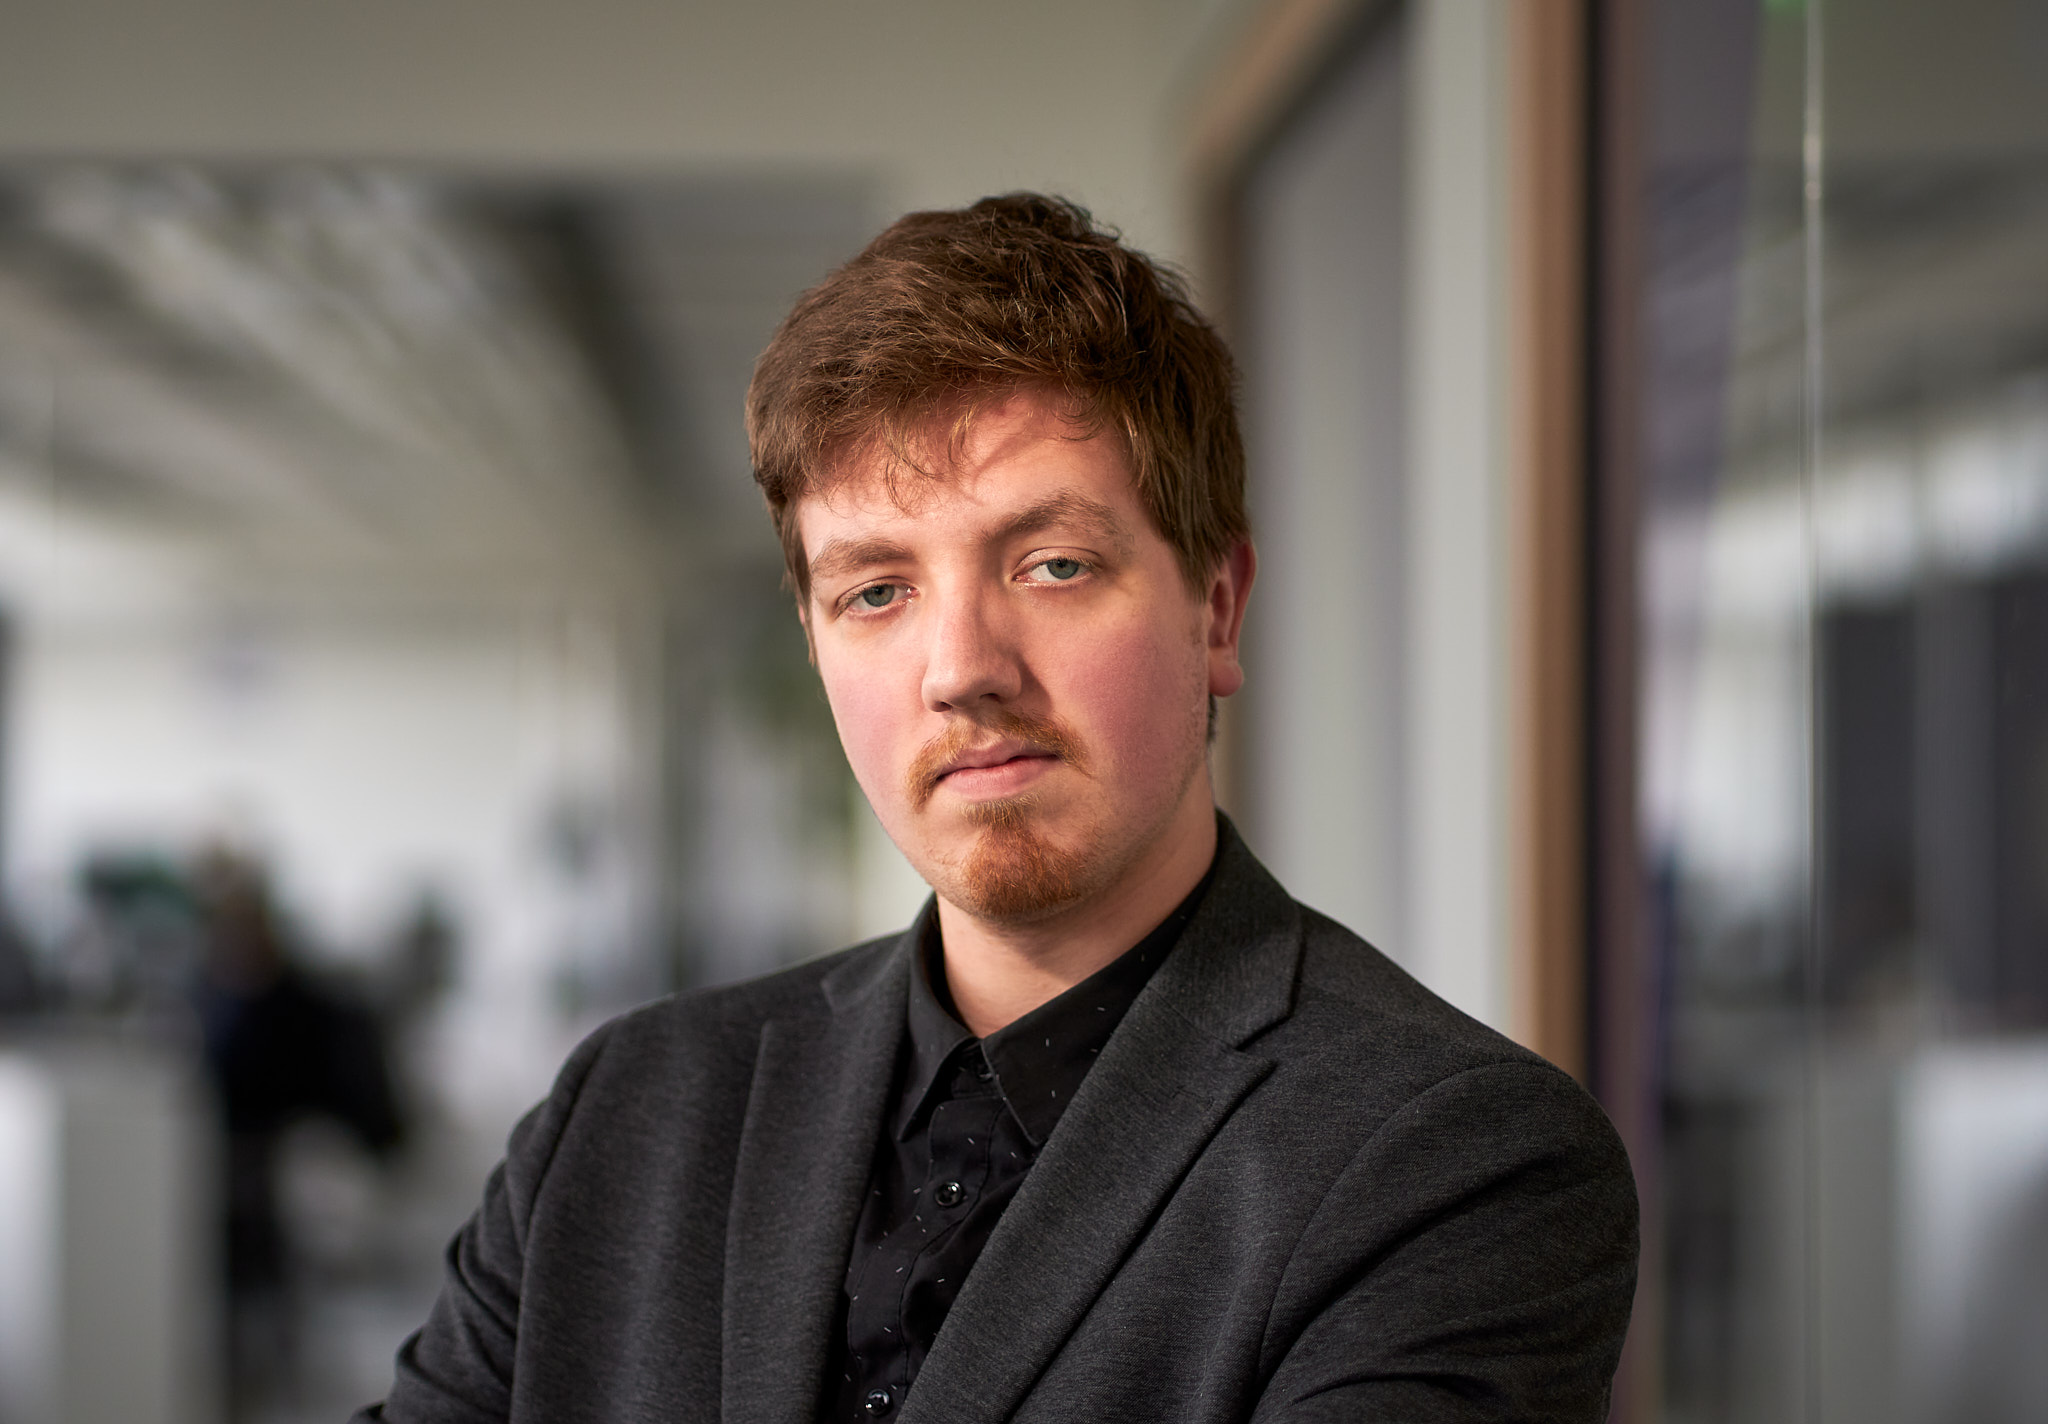 Process data and AI specialist Niels van der Burg